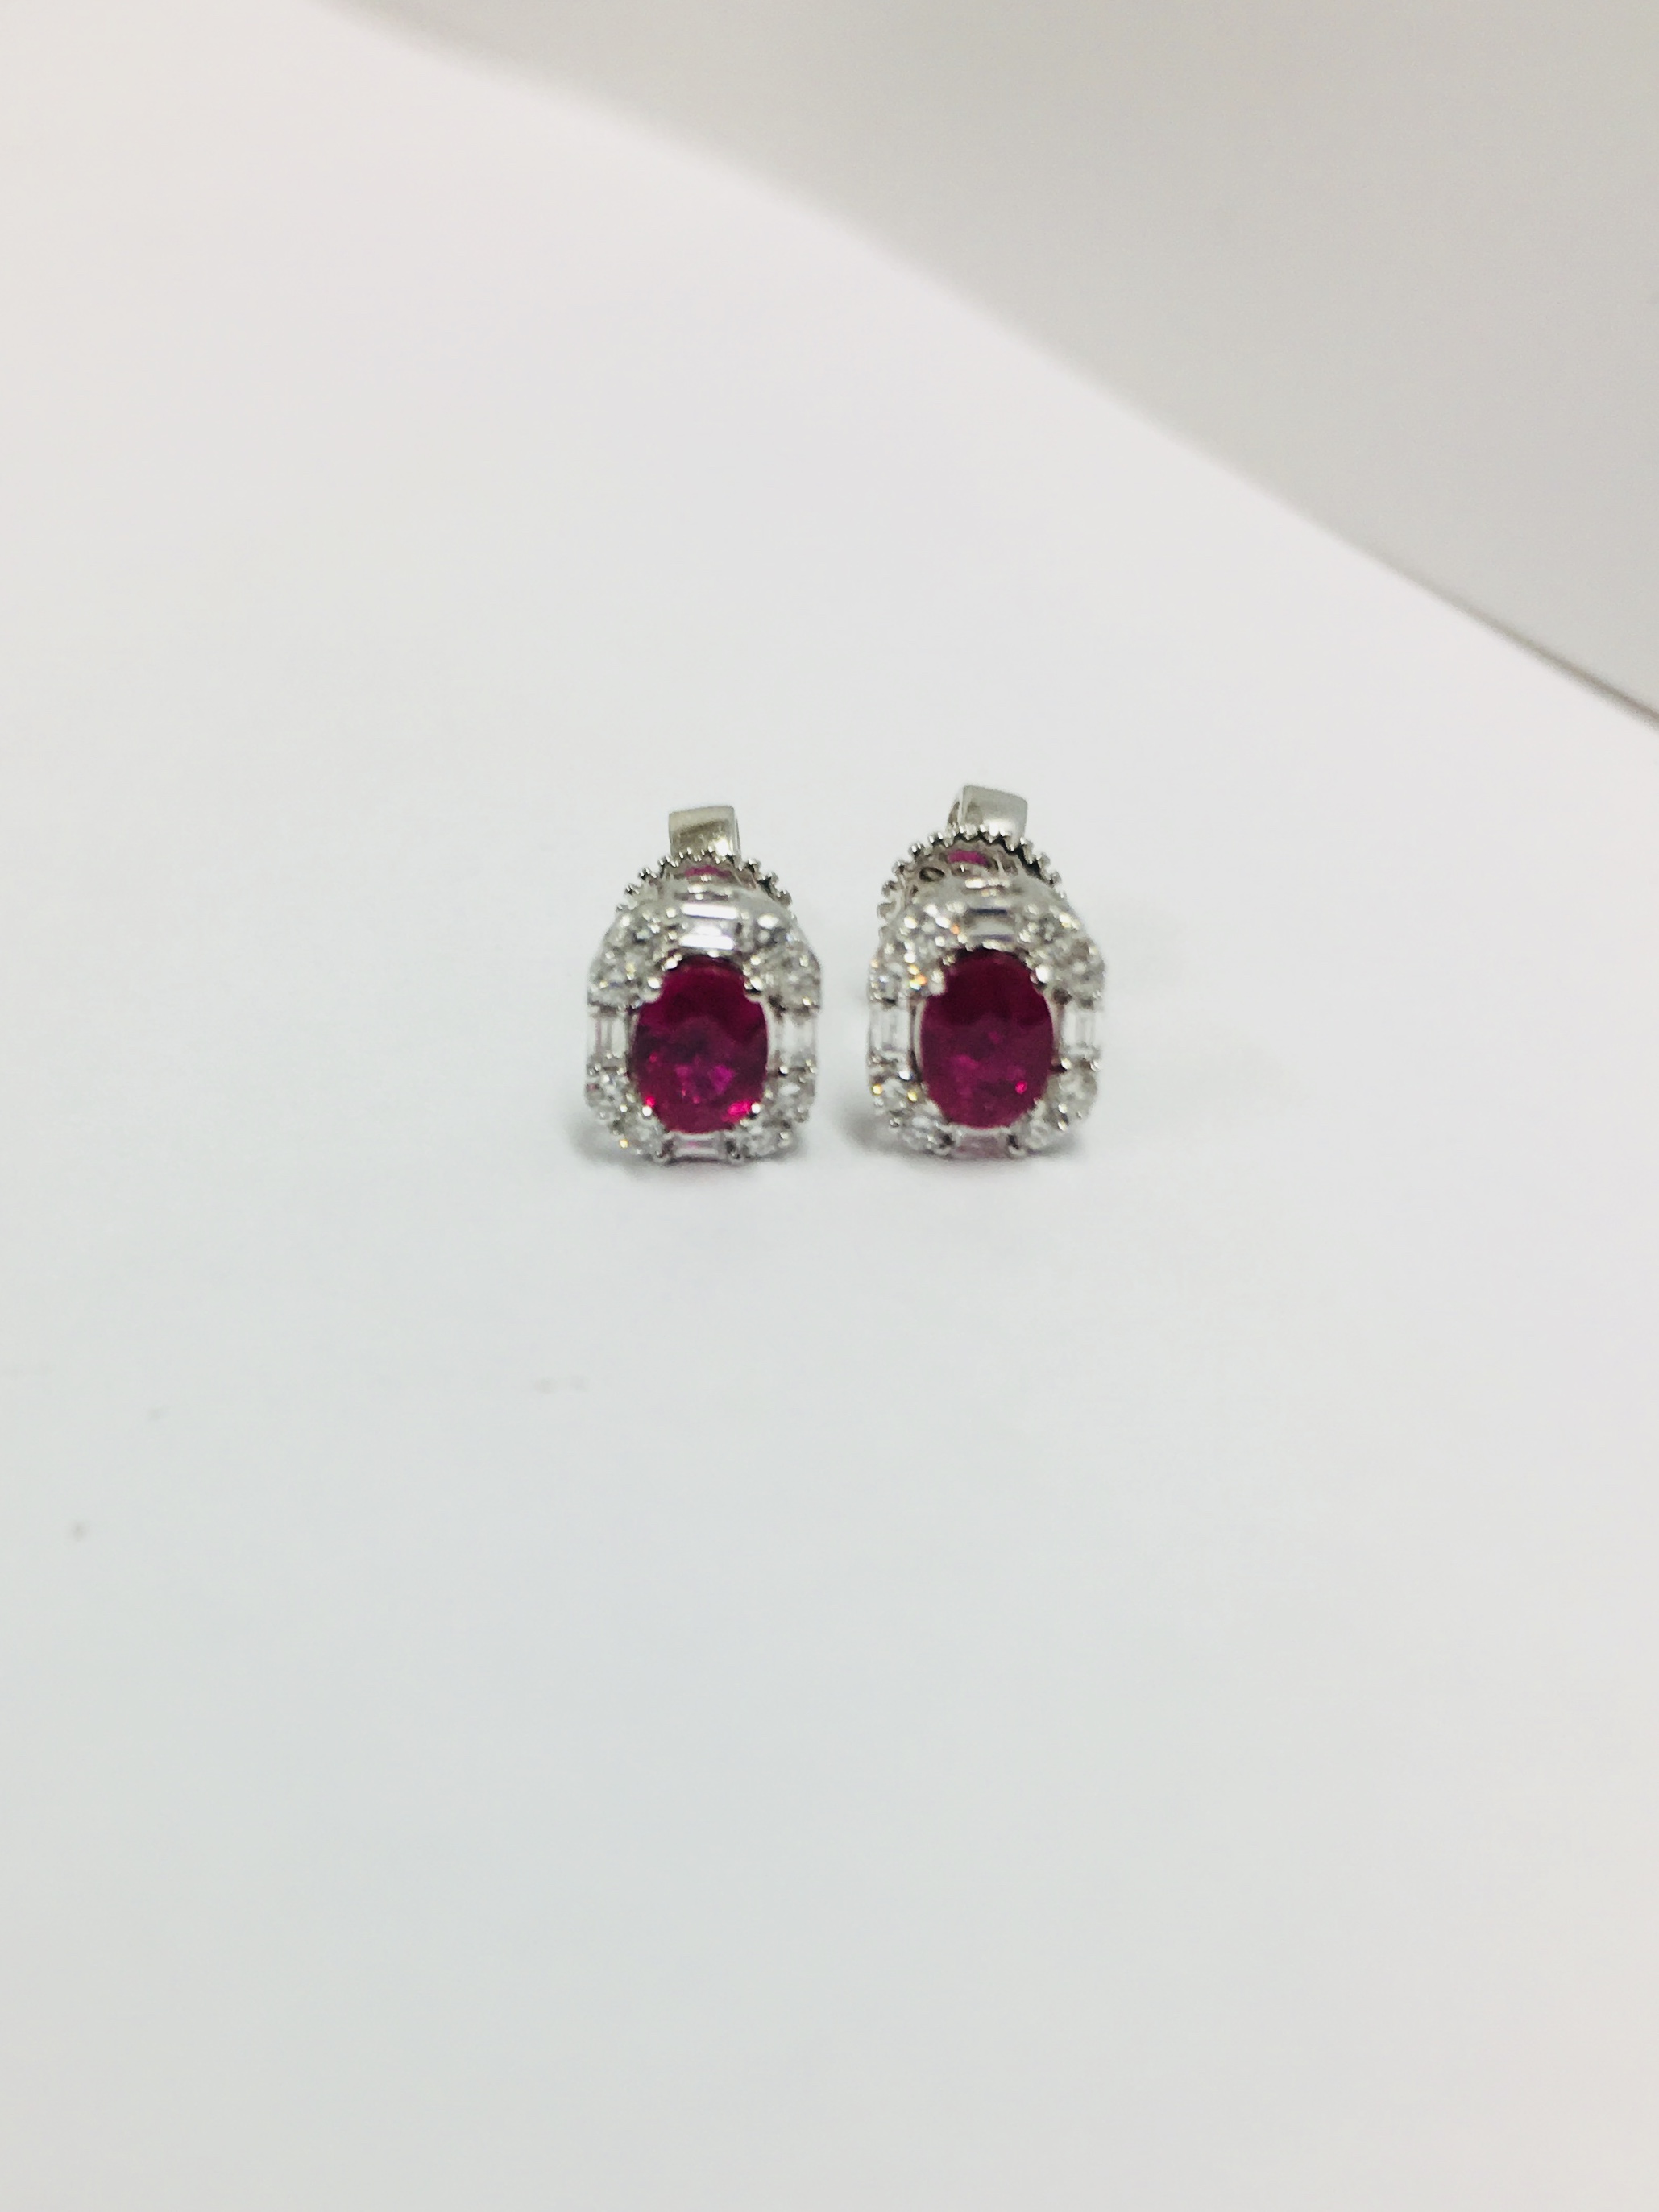 18Ct White Gold Ruby Diamond Stud Earrings, - Image 2 of 4